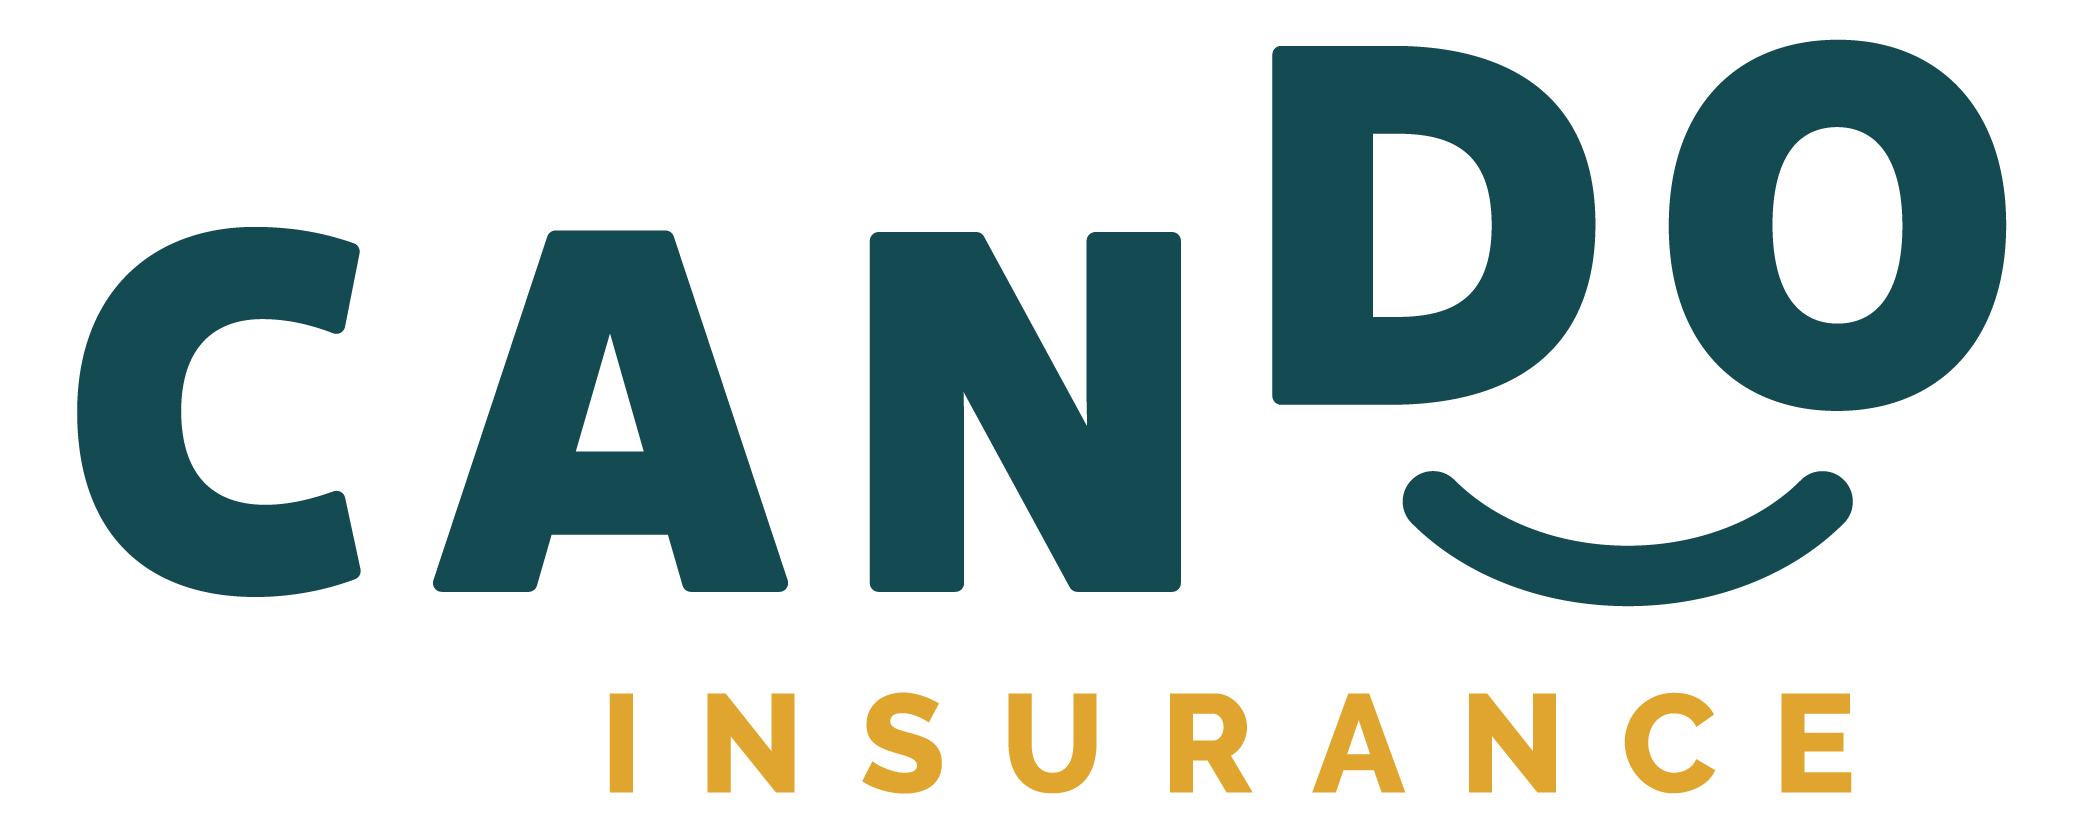 CanDo Insurance Primary Logo RGB